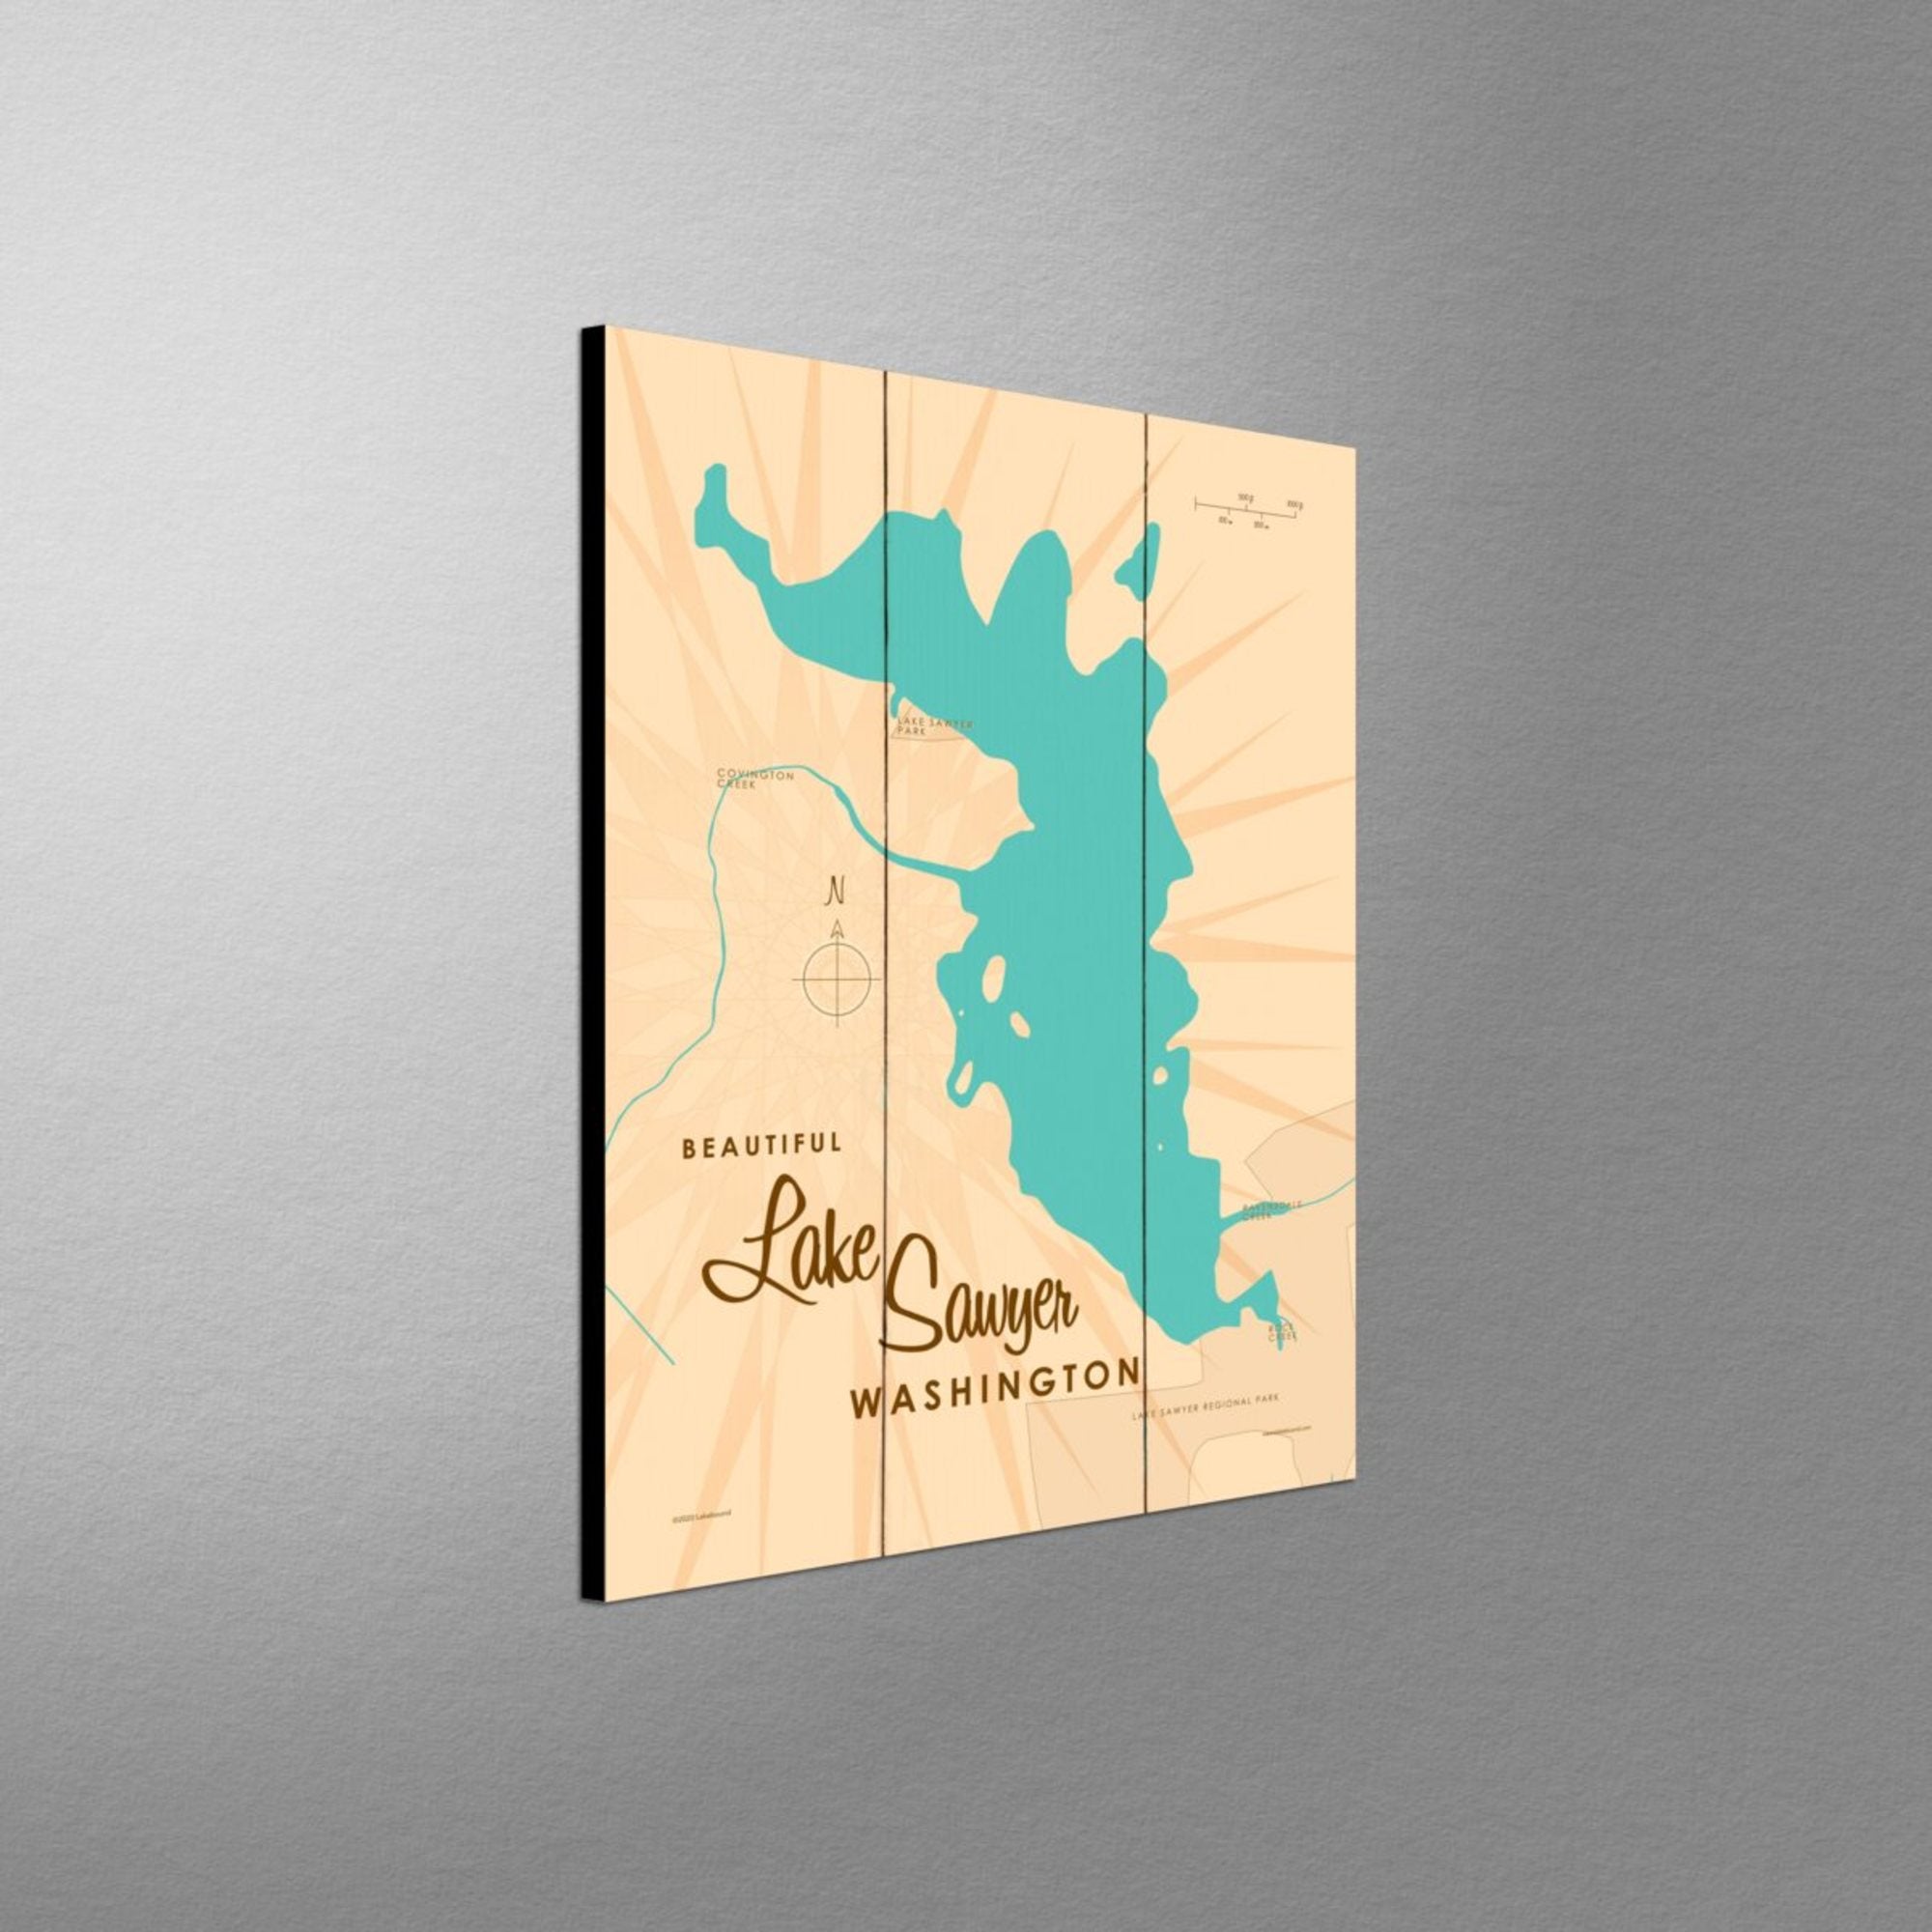 Lake Sawyer Washington, Wood Sign Map Art